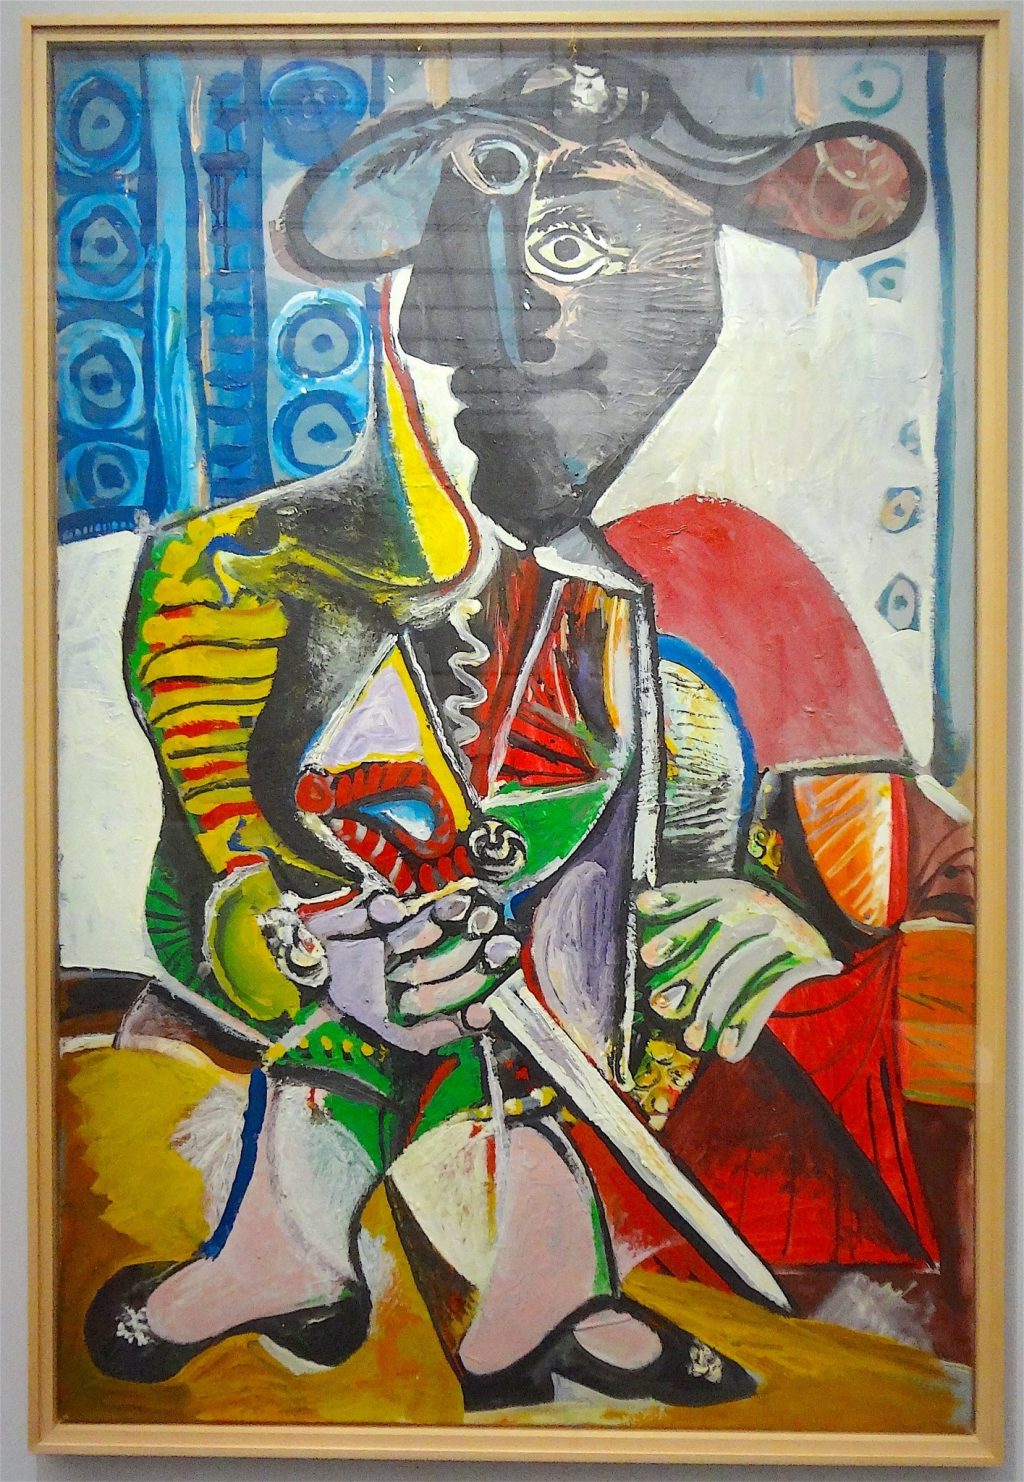 Pablo Picasso “Le Matador. Torero” 14 octobre 1970